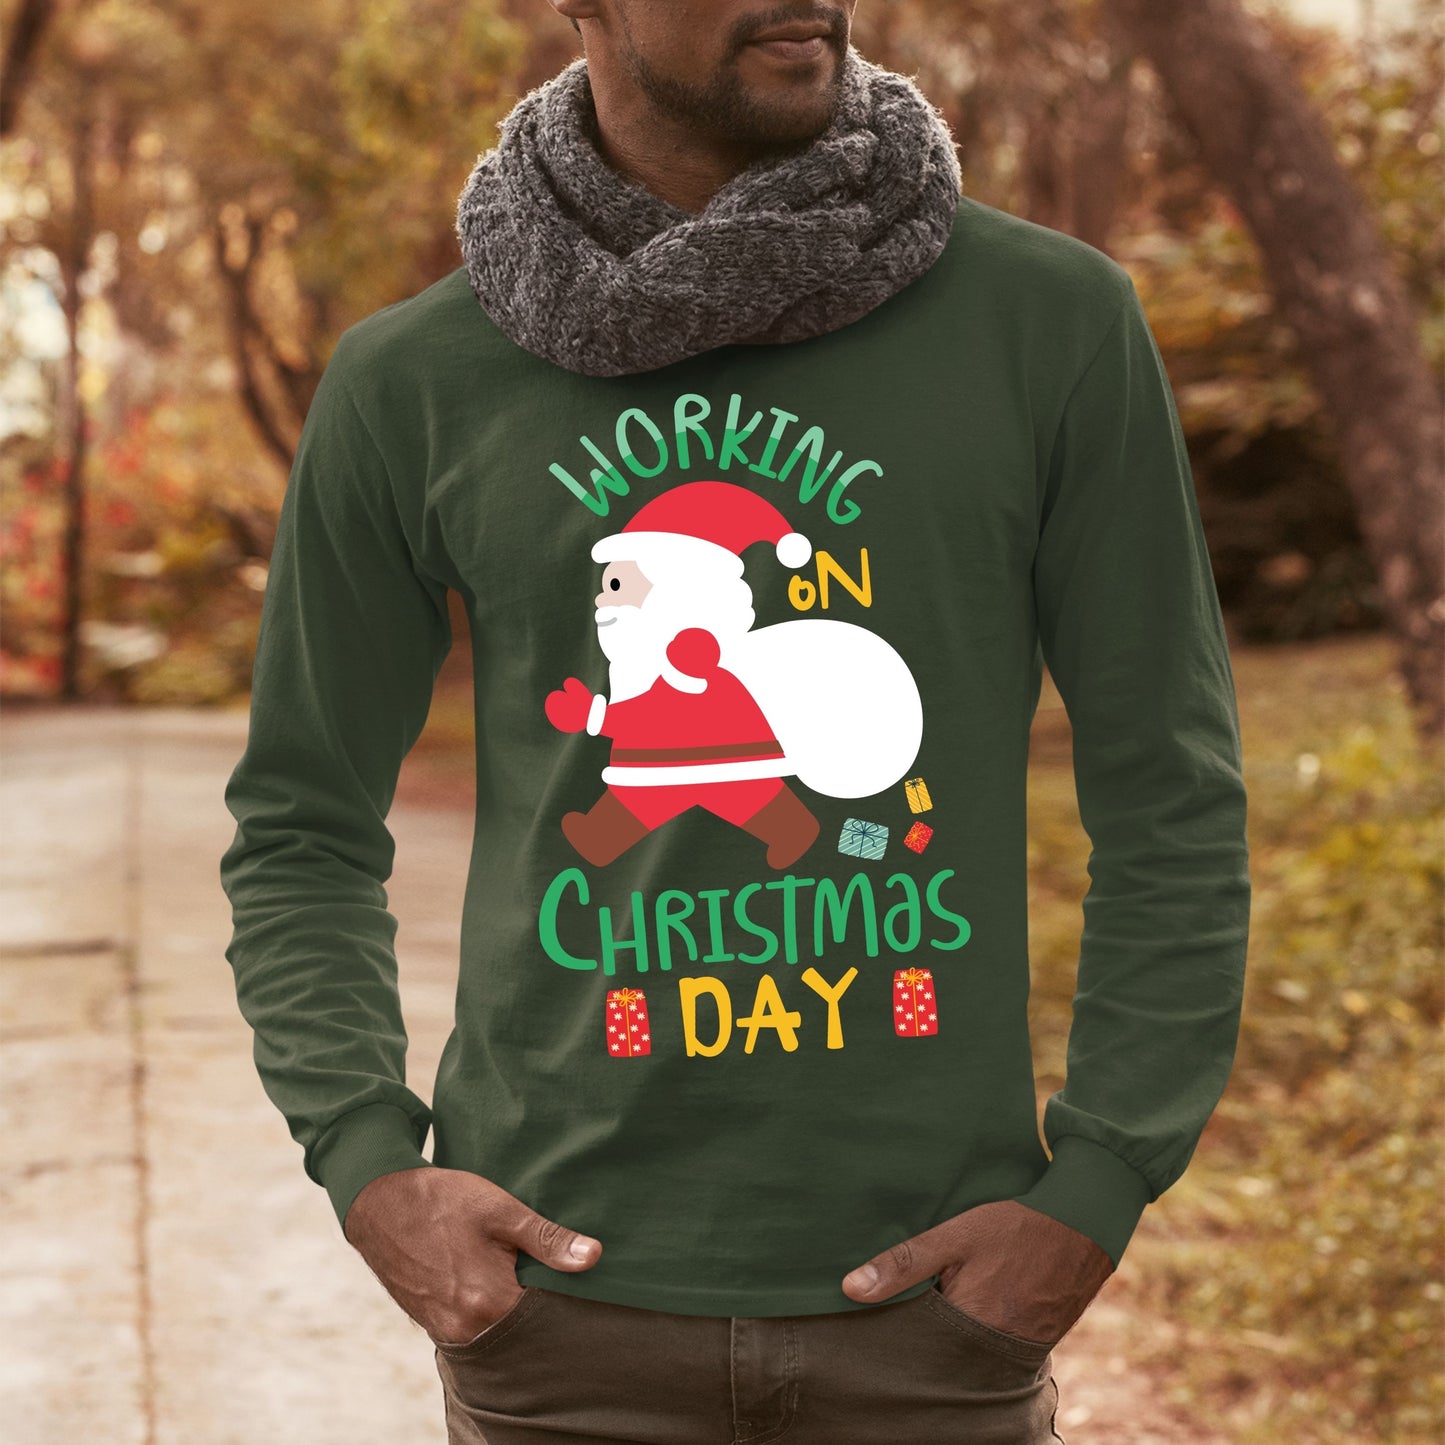 Working on Chirstmas day , Christmas Crewneck For Men, Christmas Long Sleeves, Christmas Sweater, Christmas Sweatshirt, Christmas Present